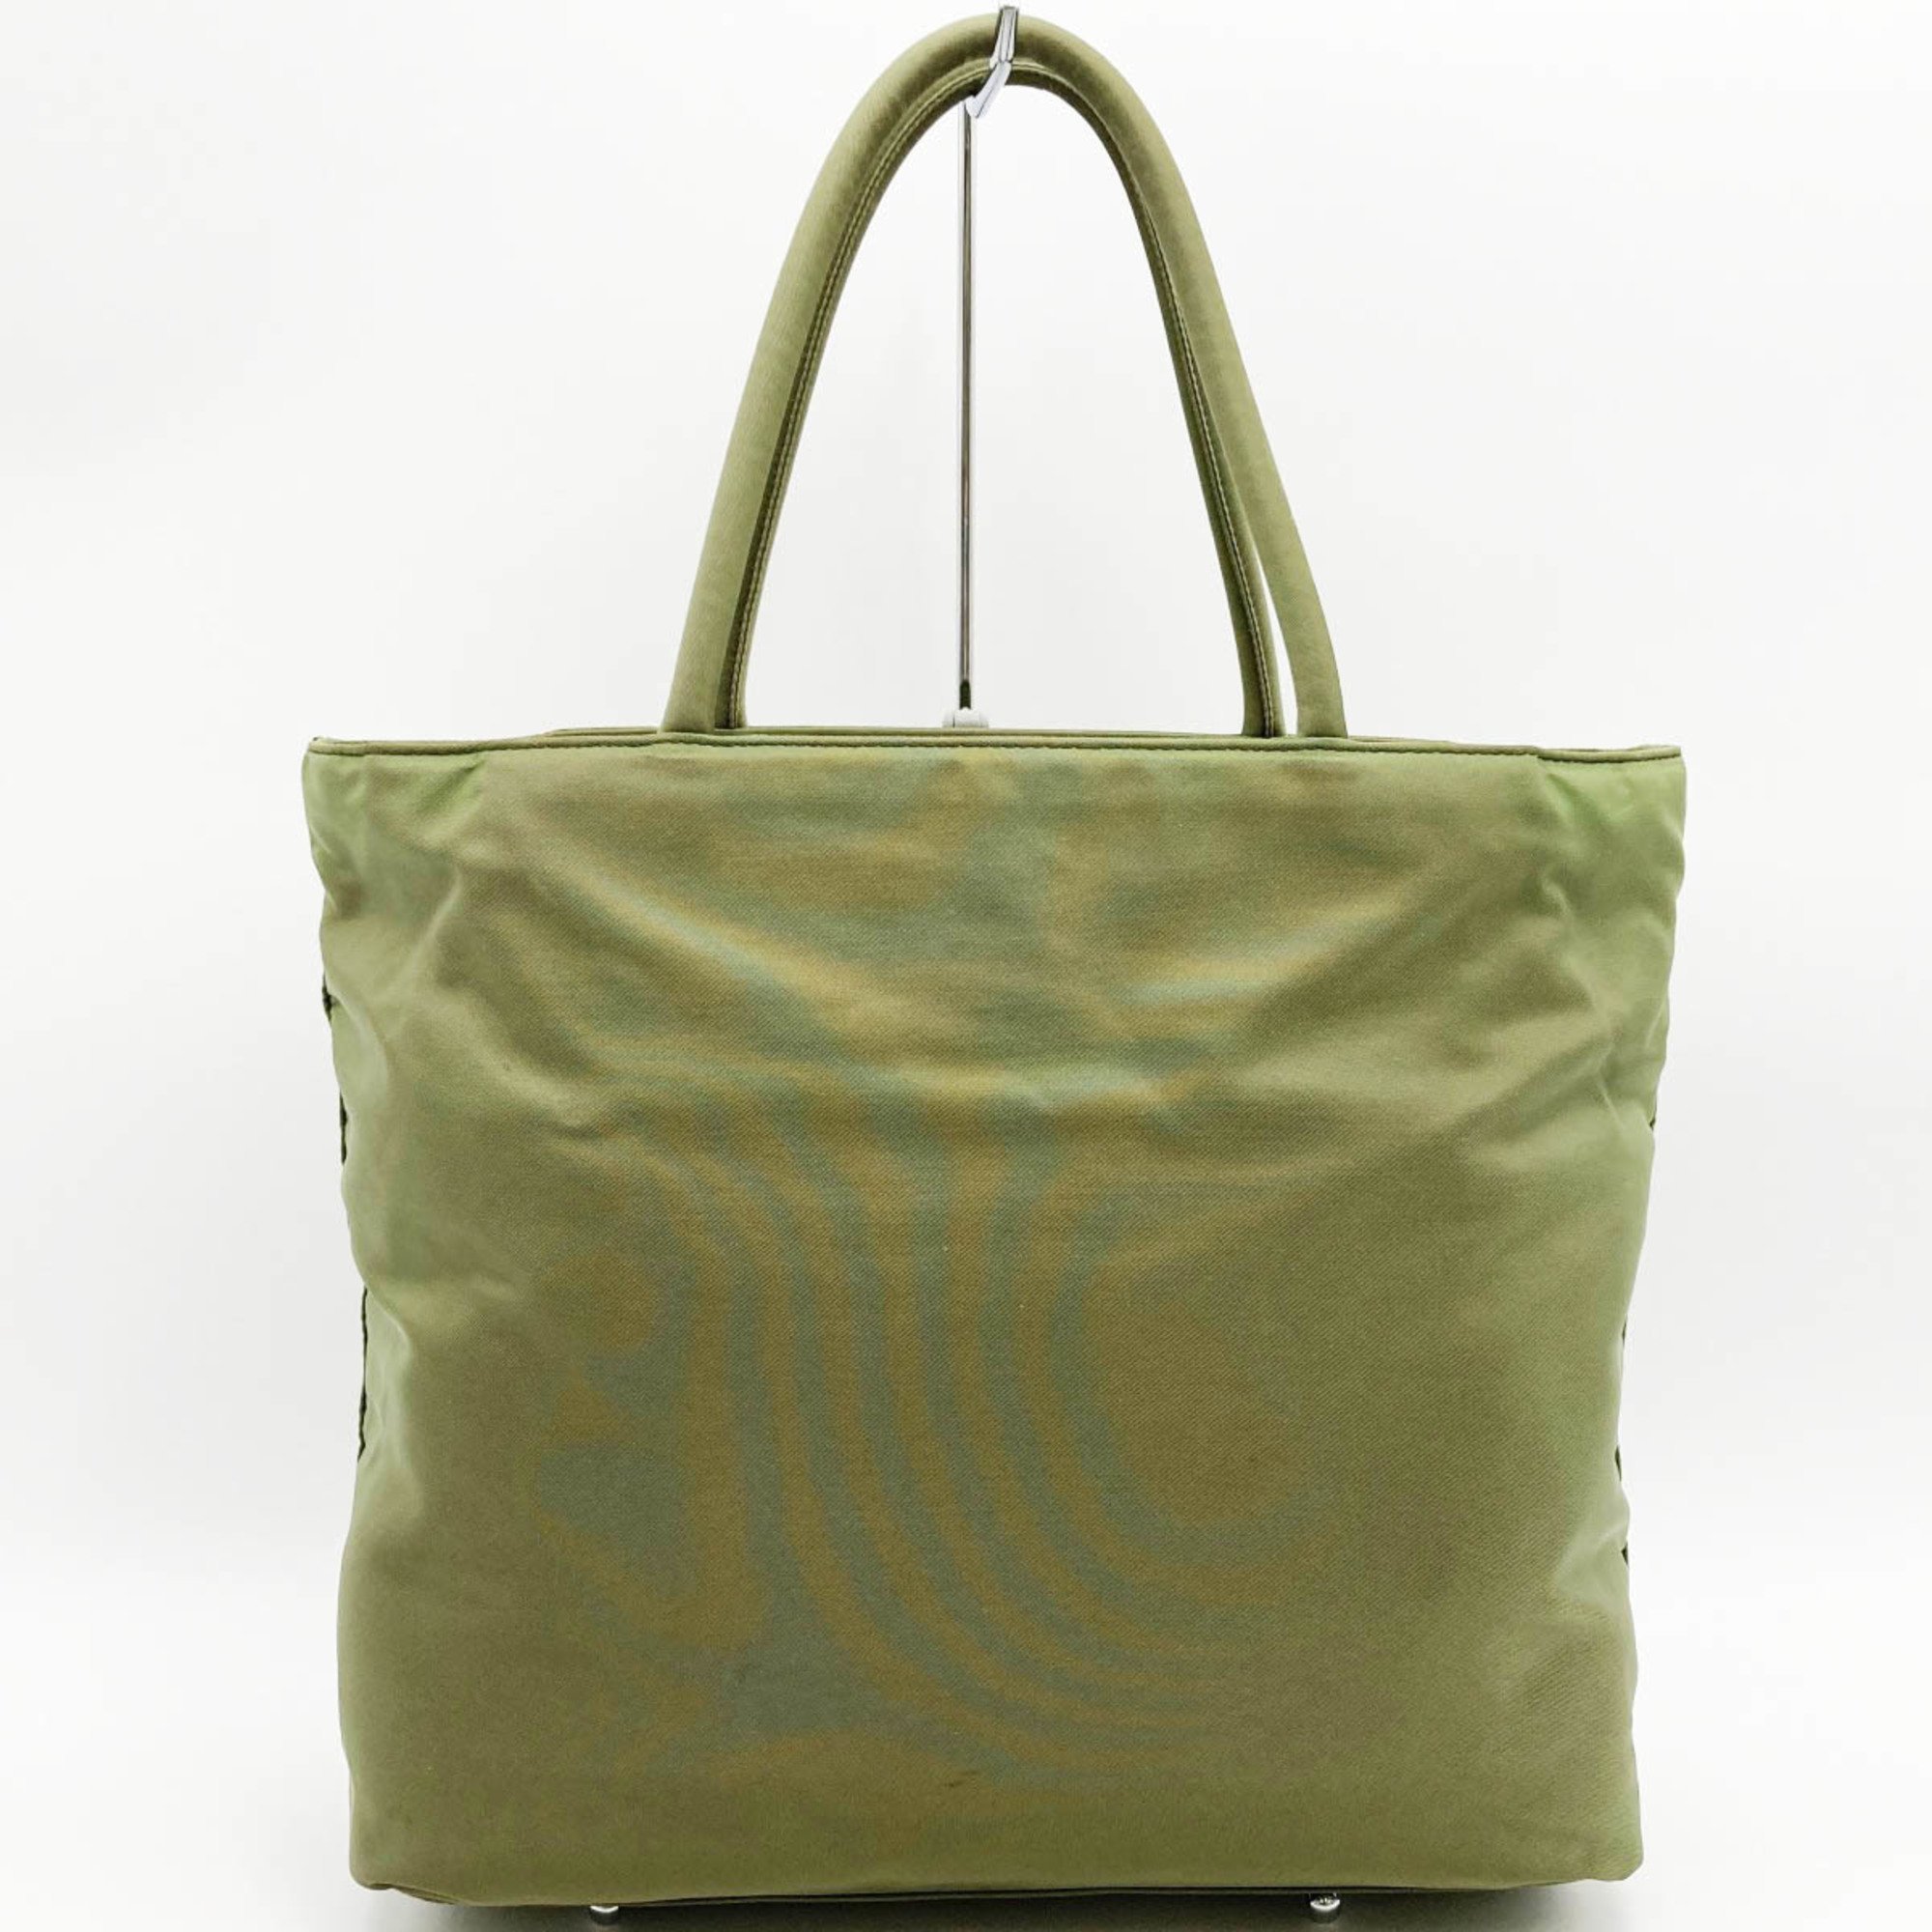 PRADA Prada tote bag handbag nylon triangle logo khaki ladies men's fashion USED